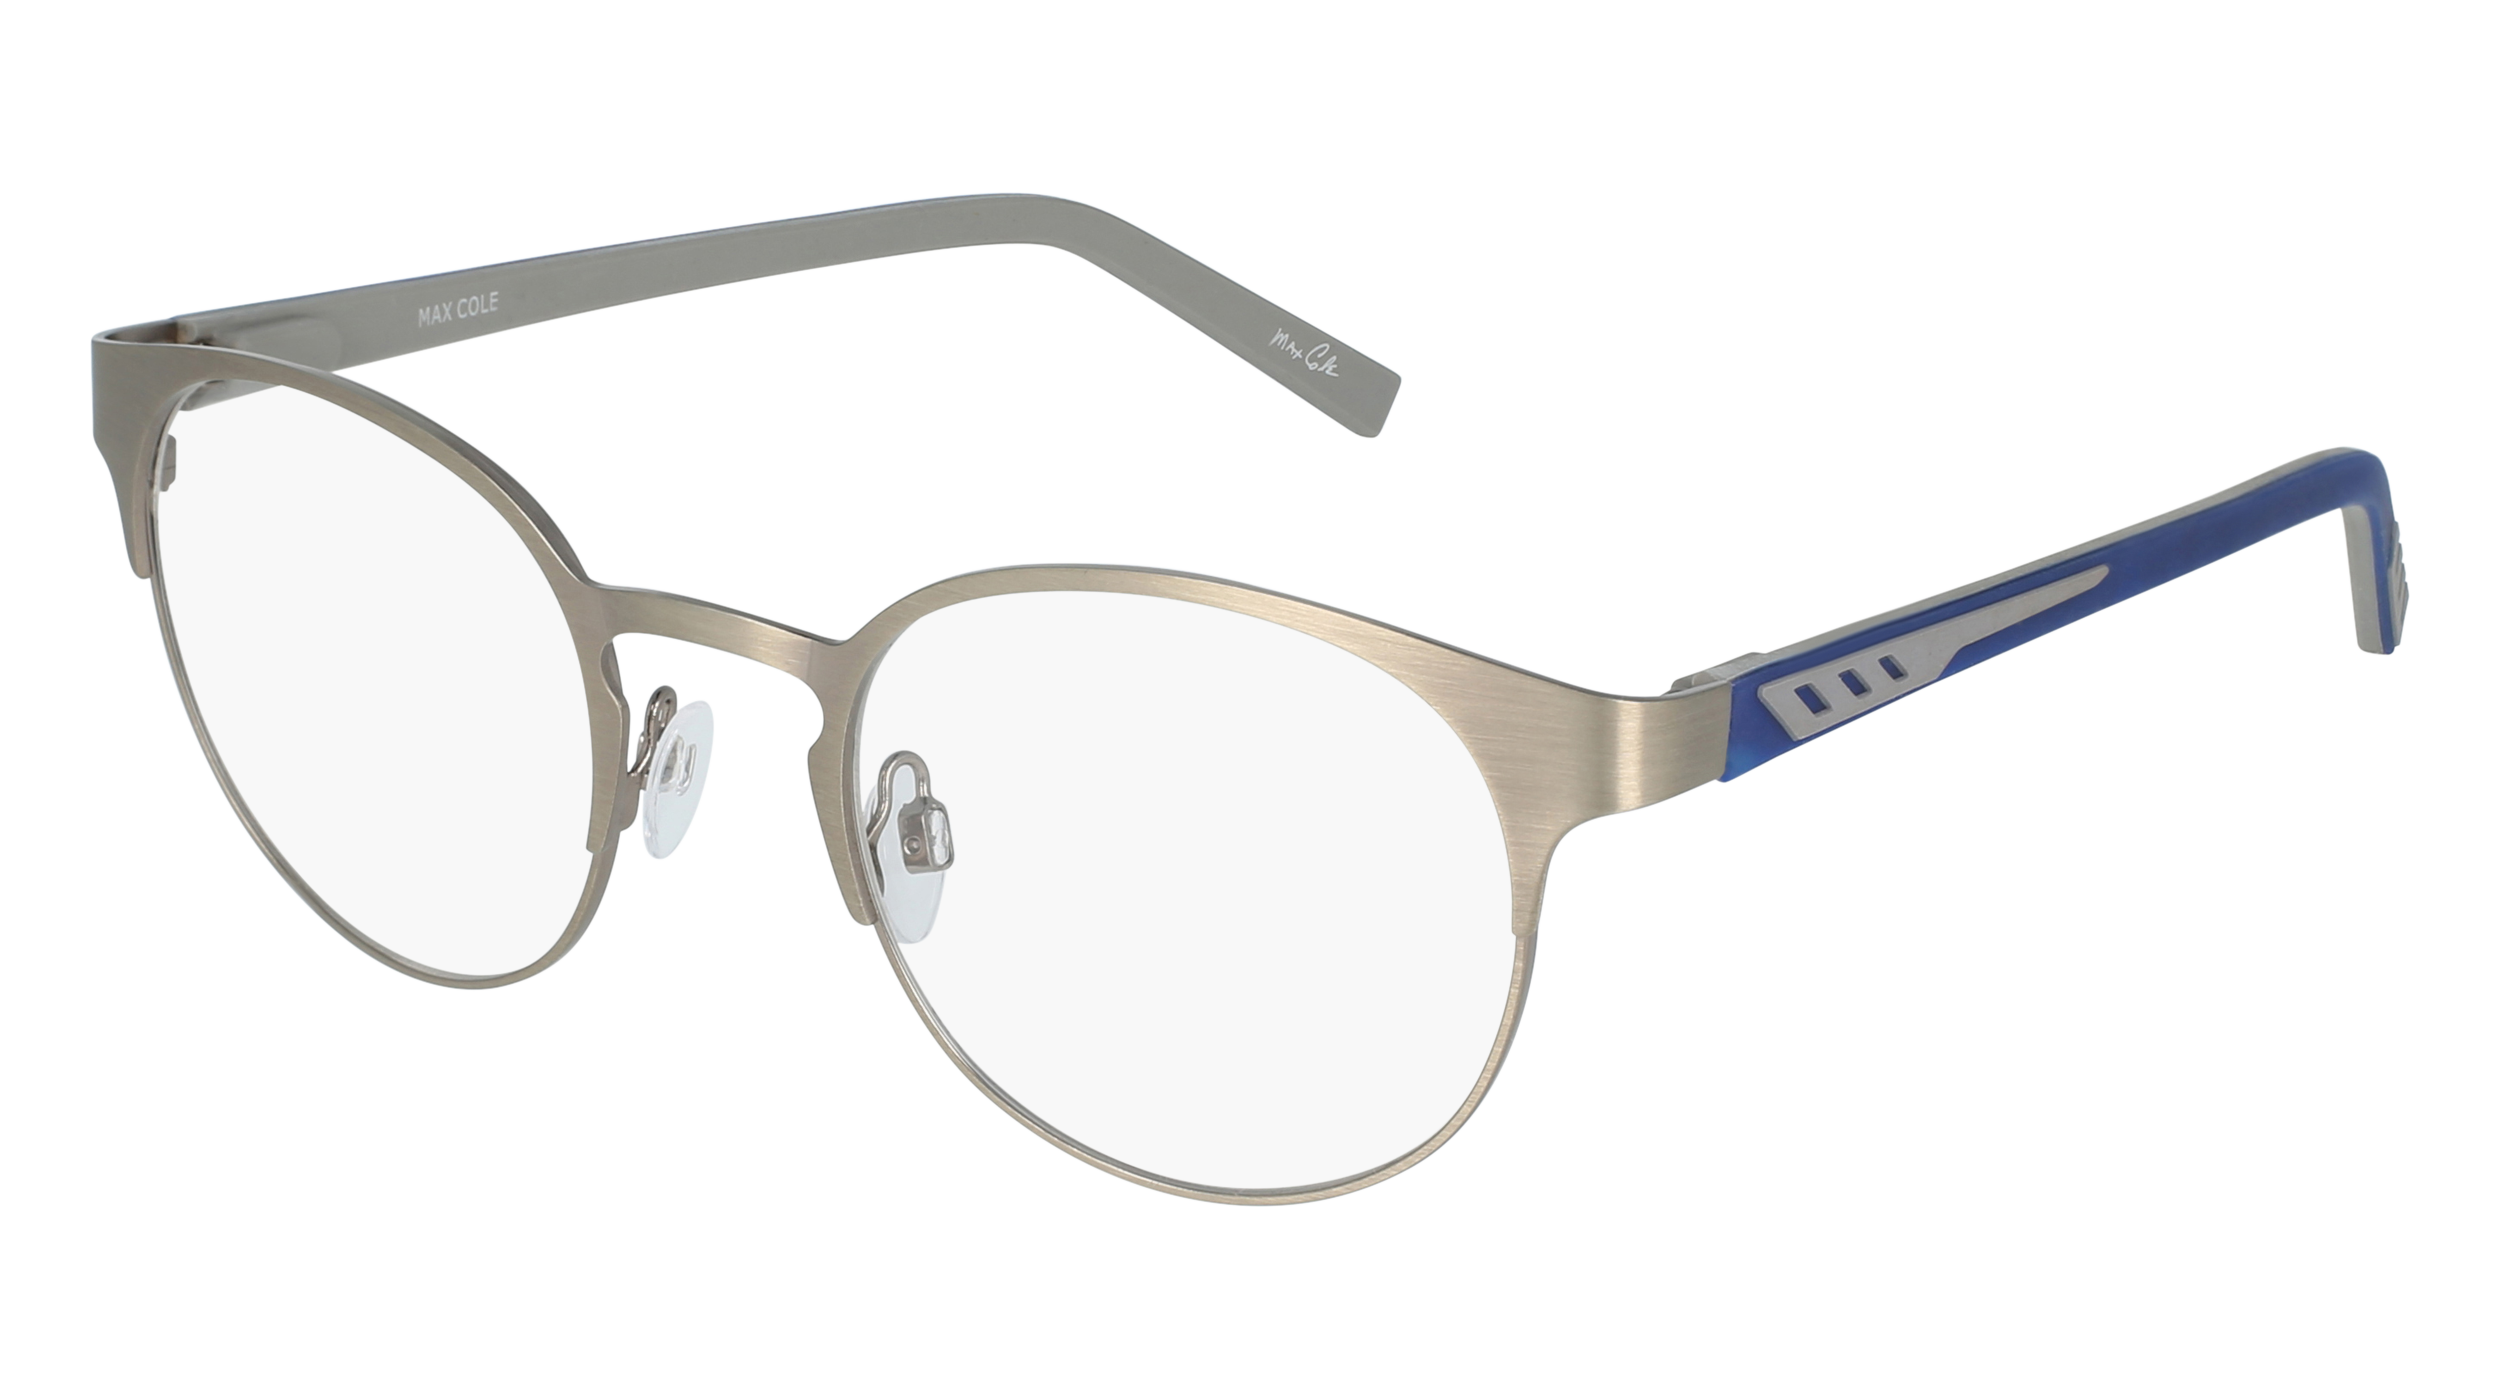 M MC 1501 unisex's eyeglasses (from the side)